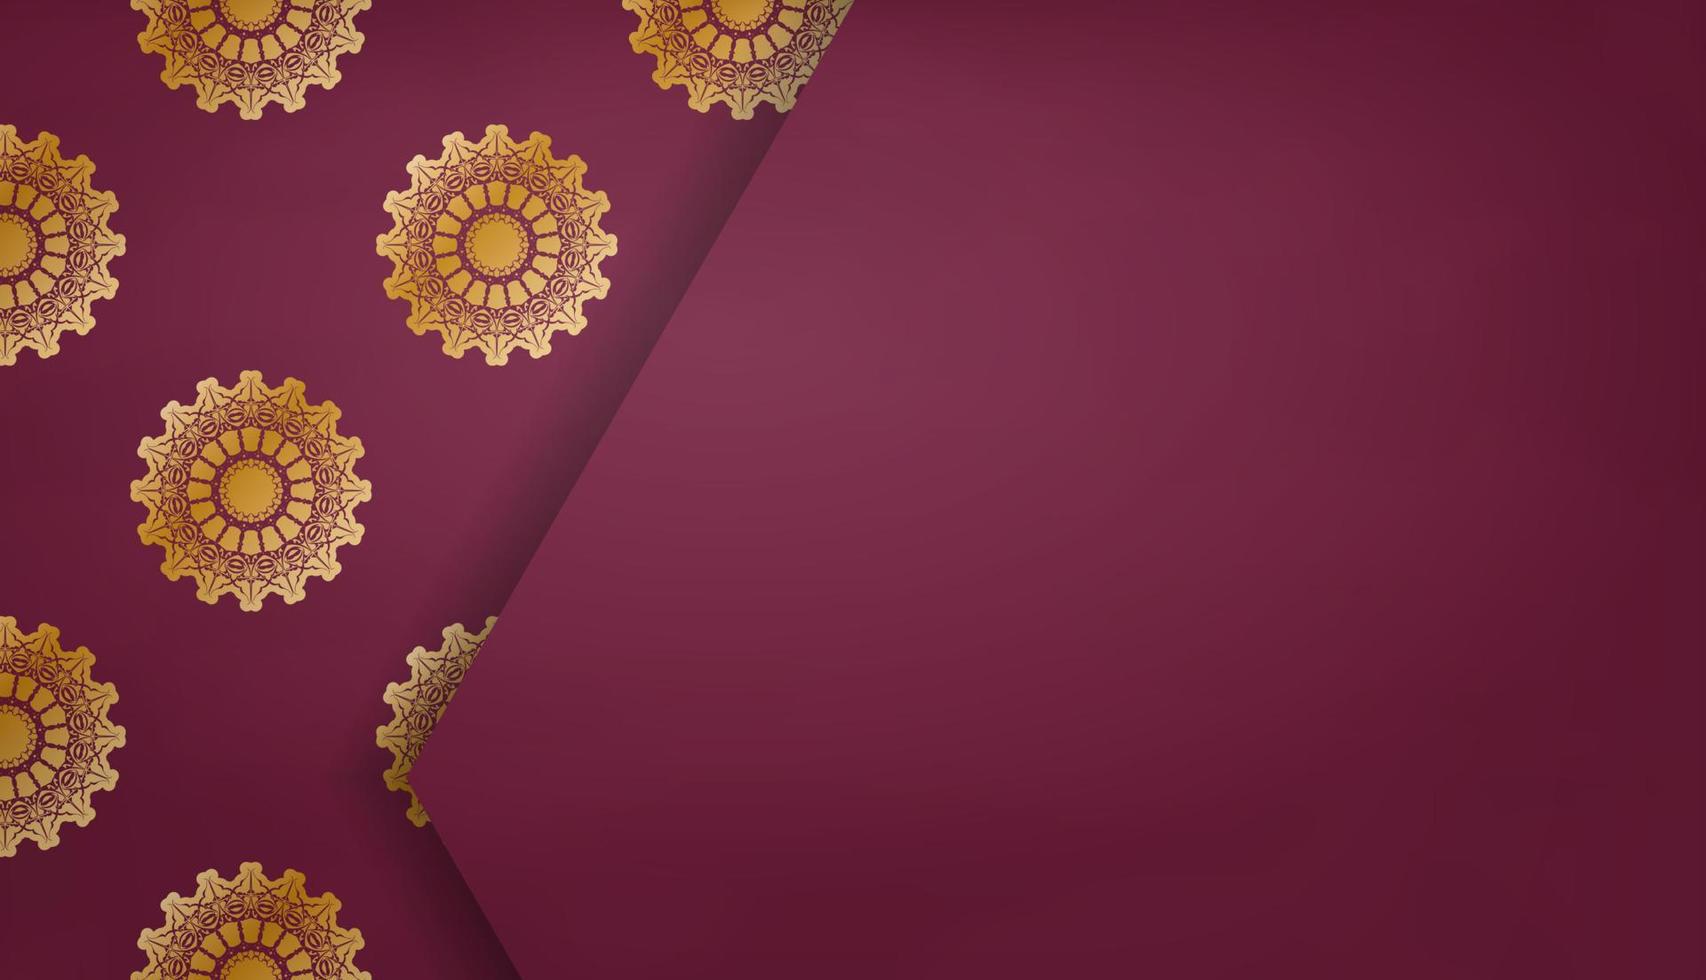 baner van bordeaux kleur met mandala goud ornament voor ontwerp onder logo vector